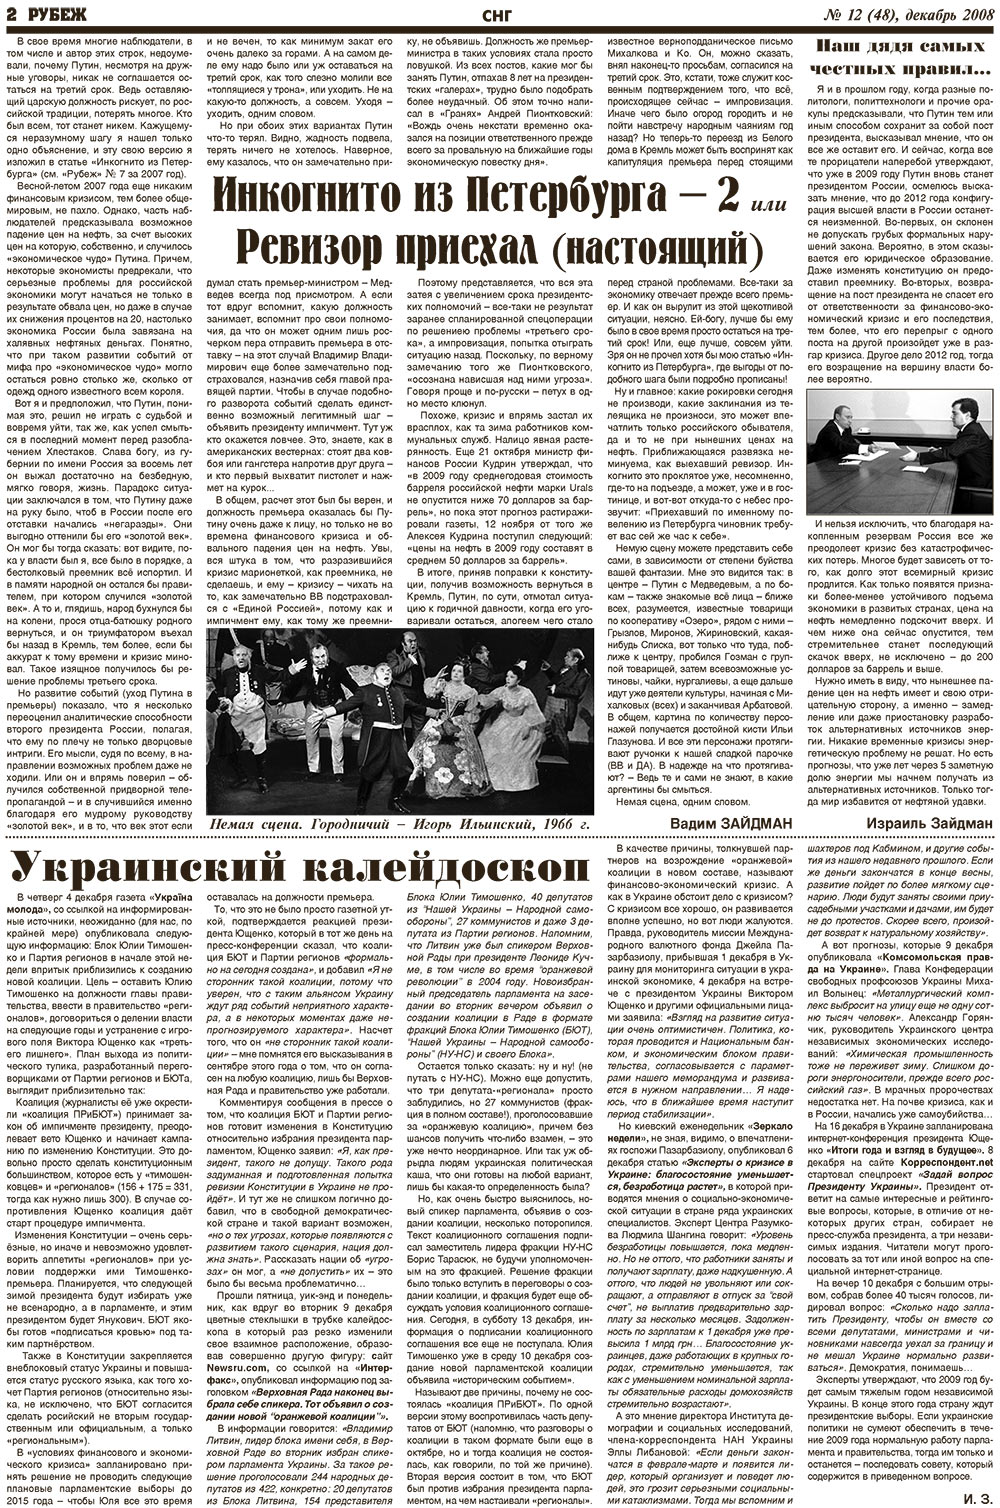 Рубеж, газета. 2008 №12 стр.2